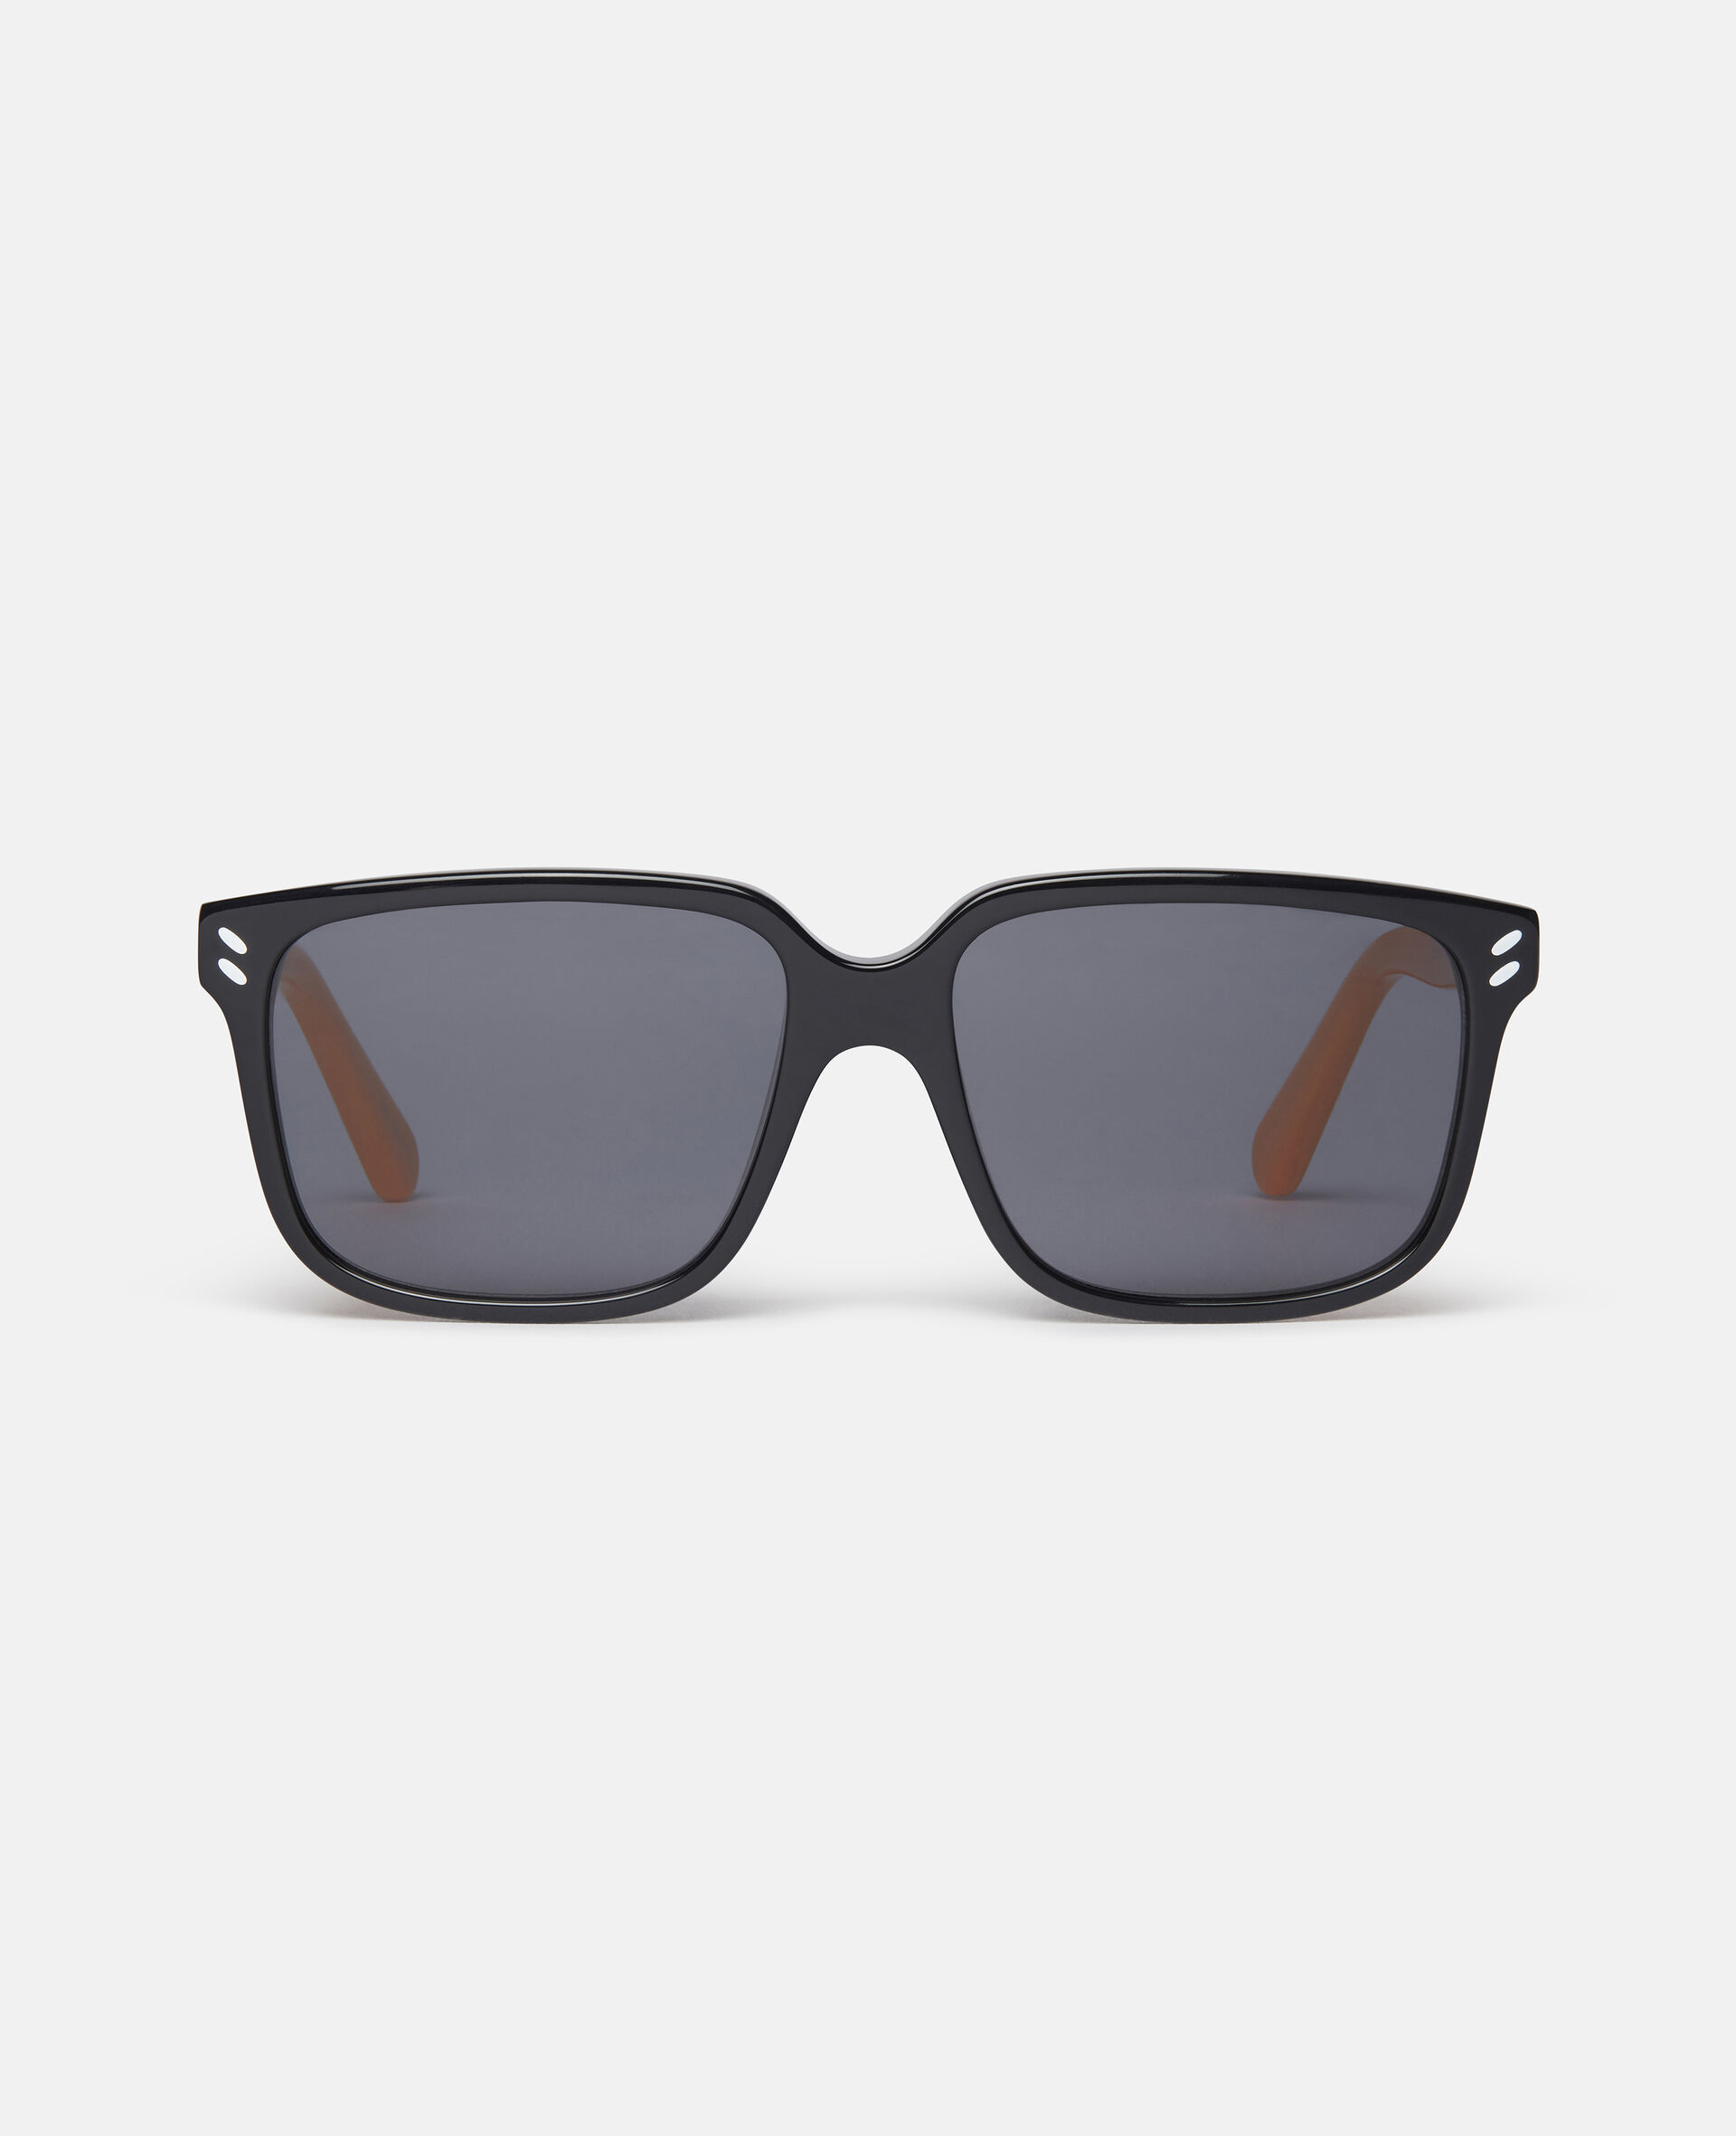 Geometric Sunglasses-Black-large